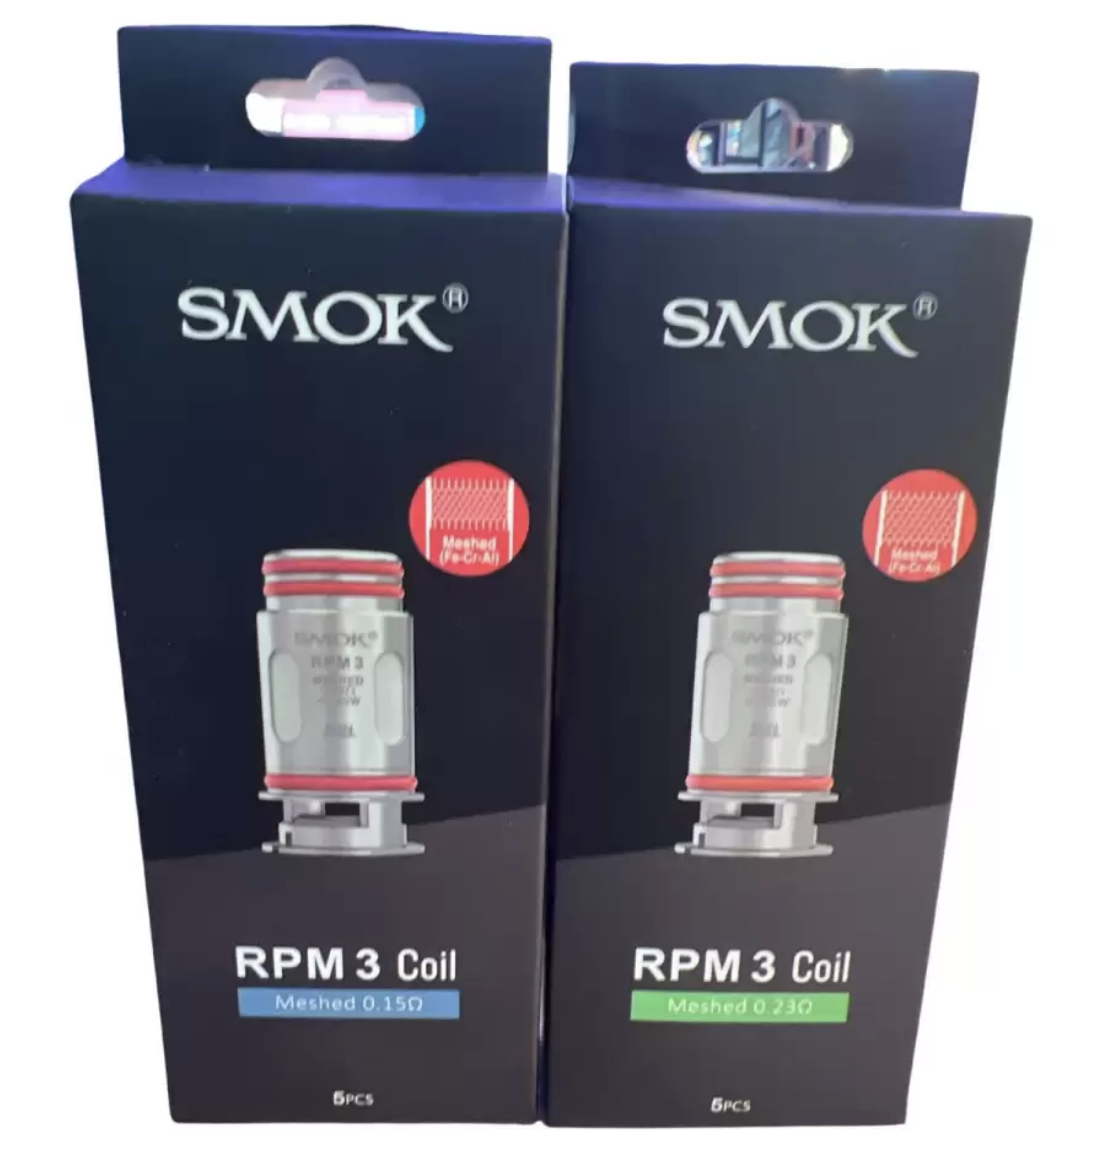 RPM 3 coils